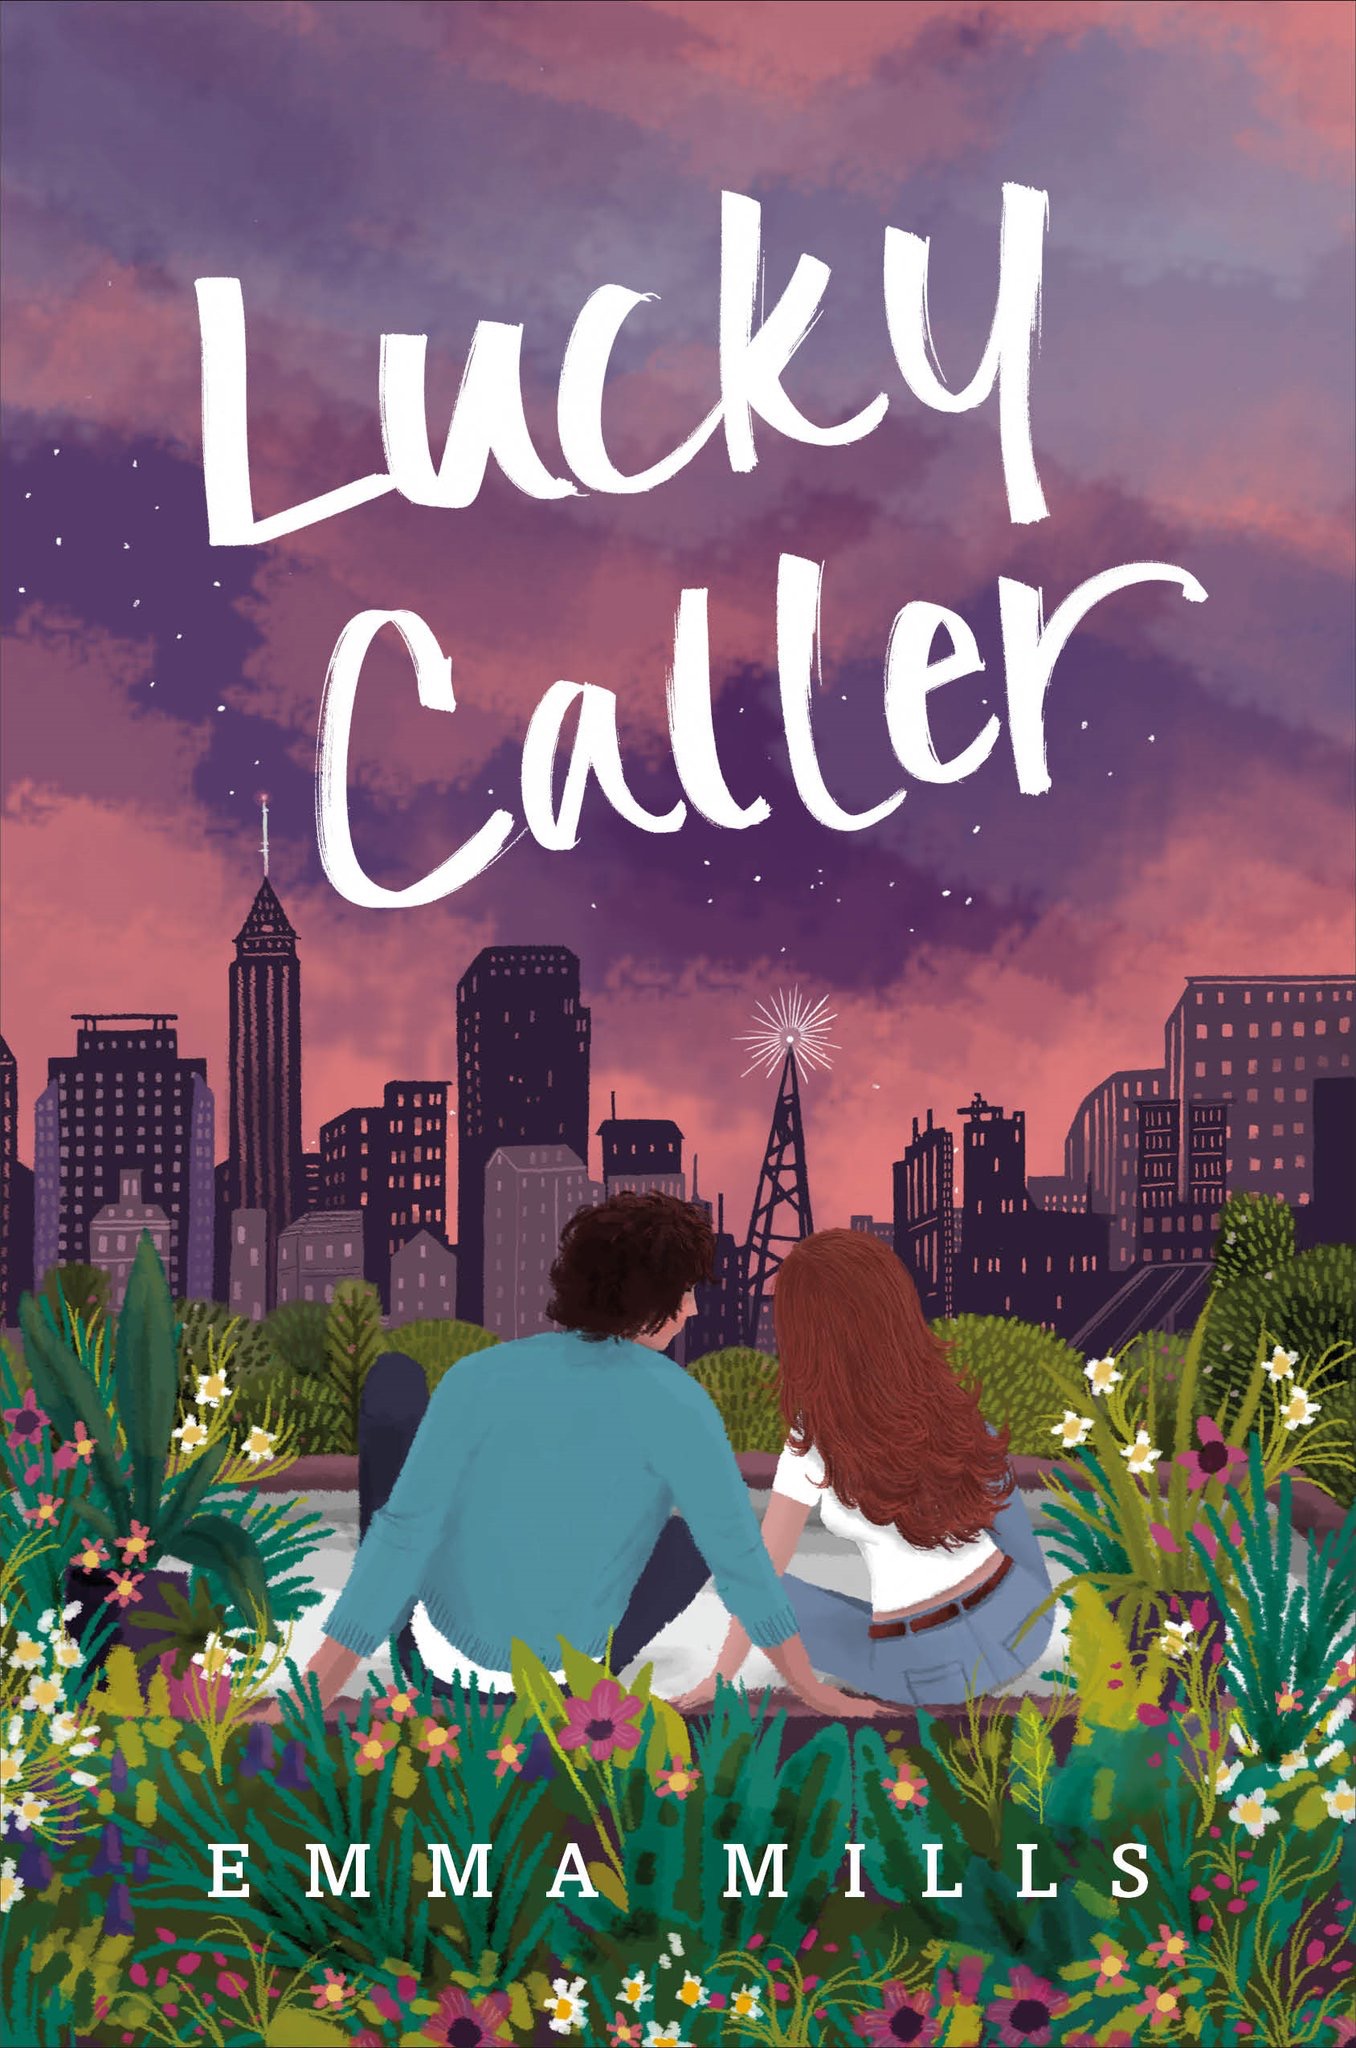 When Will Lucky Caller Novel Come Out? 2020 Contemporary Fiction Book Release Dates